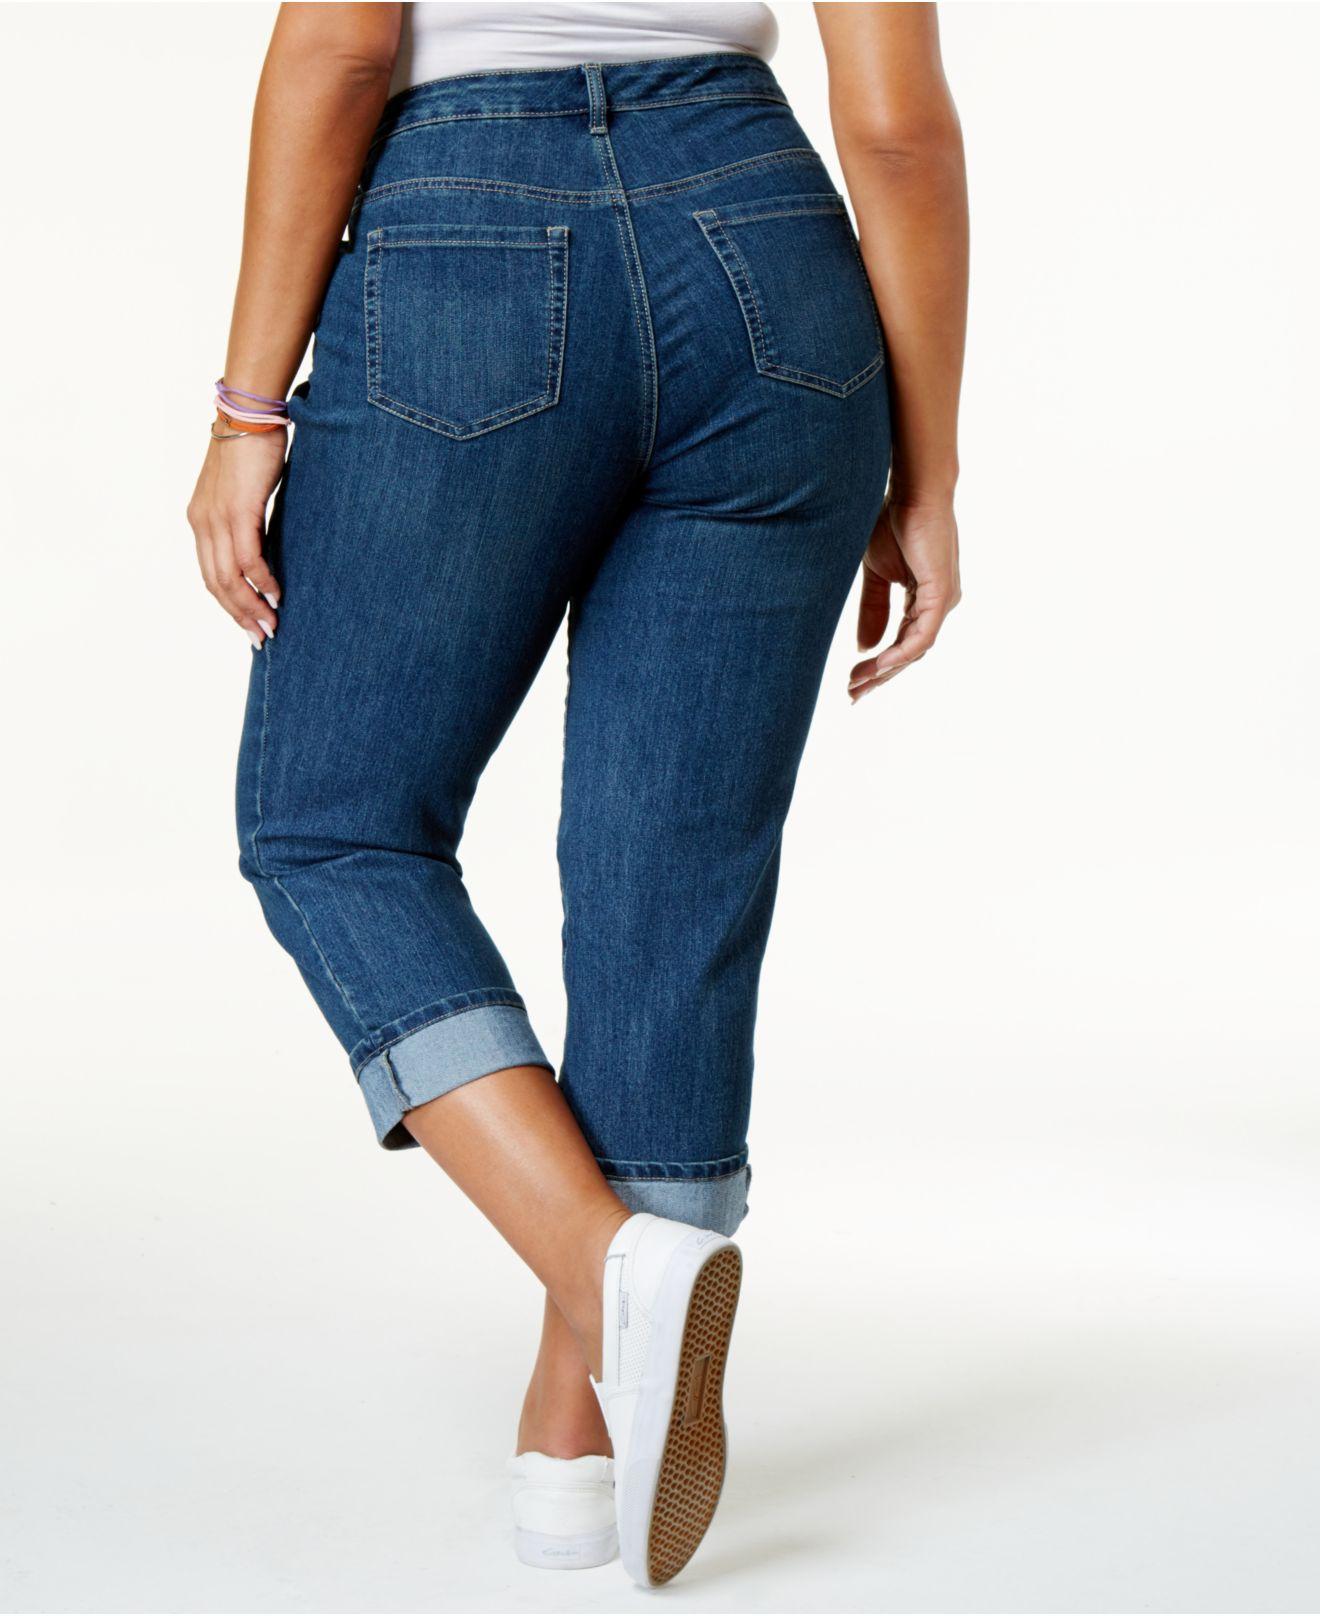 Lyst Style & Co. Plus Size Cuffed Capri Jeans in Blue